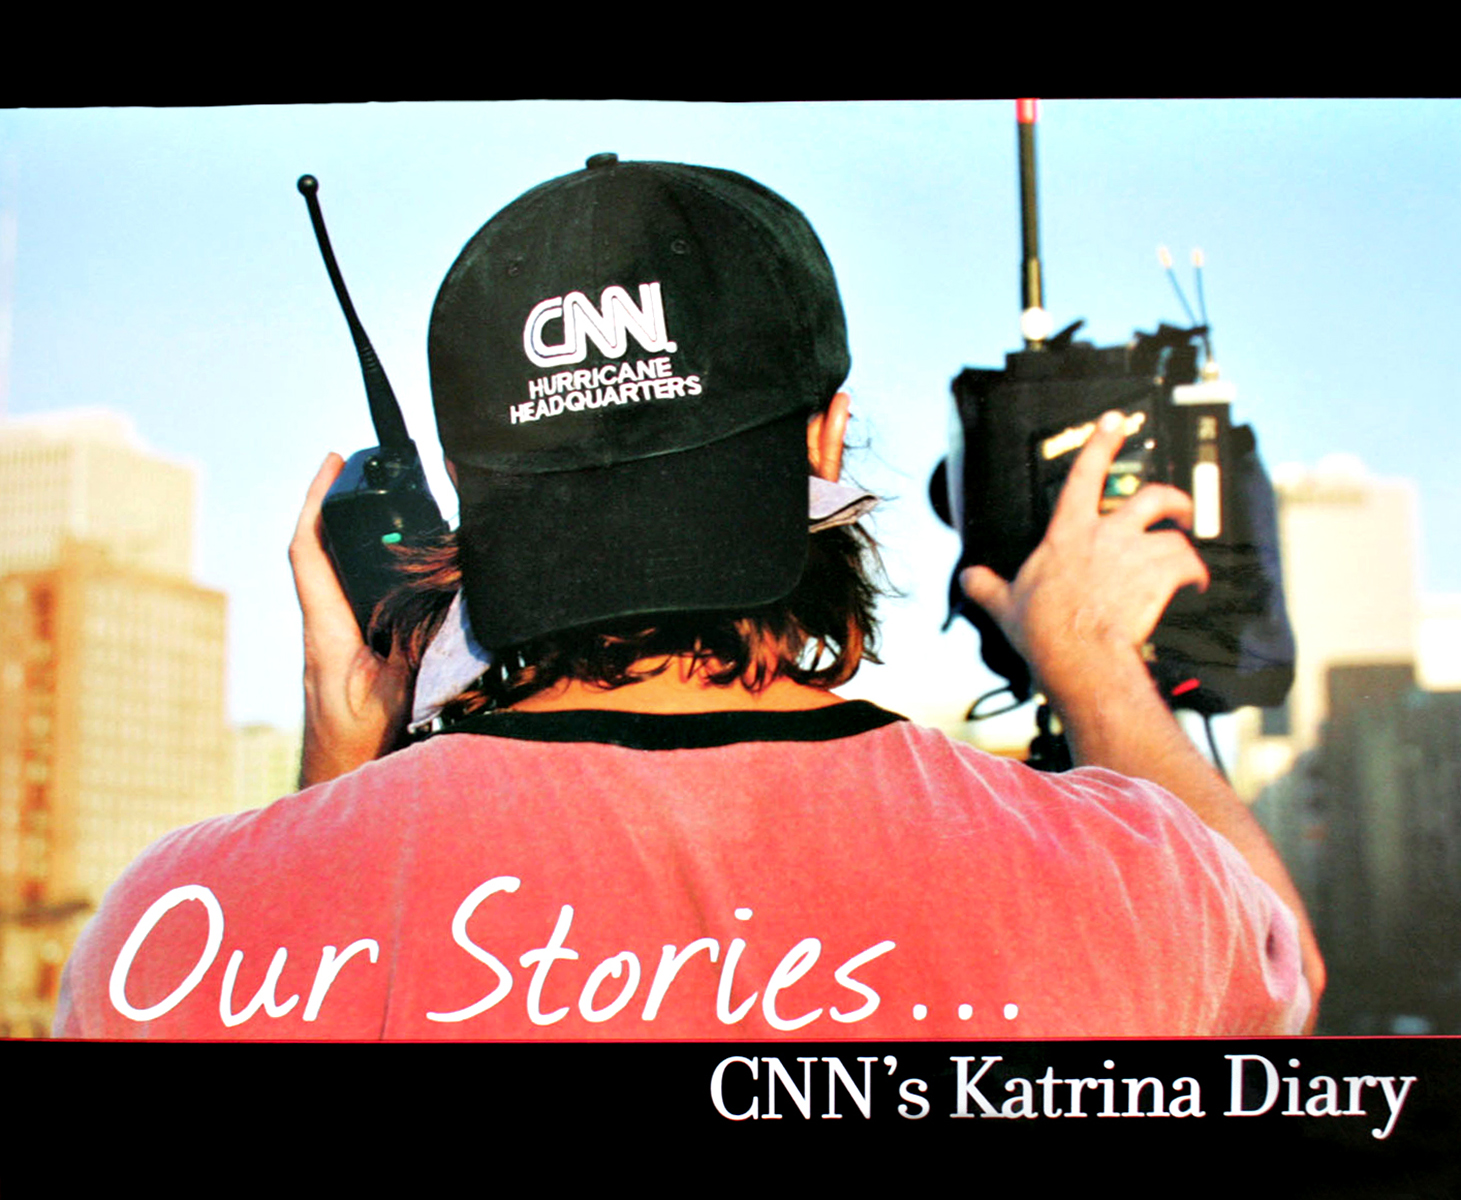 CNN camerman working during Hurricane Katrina in New Orleans